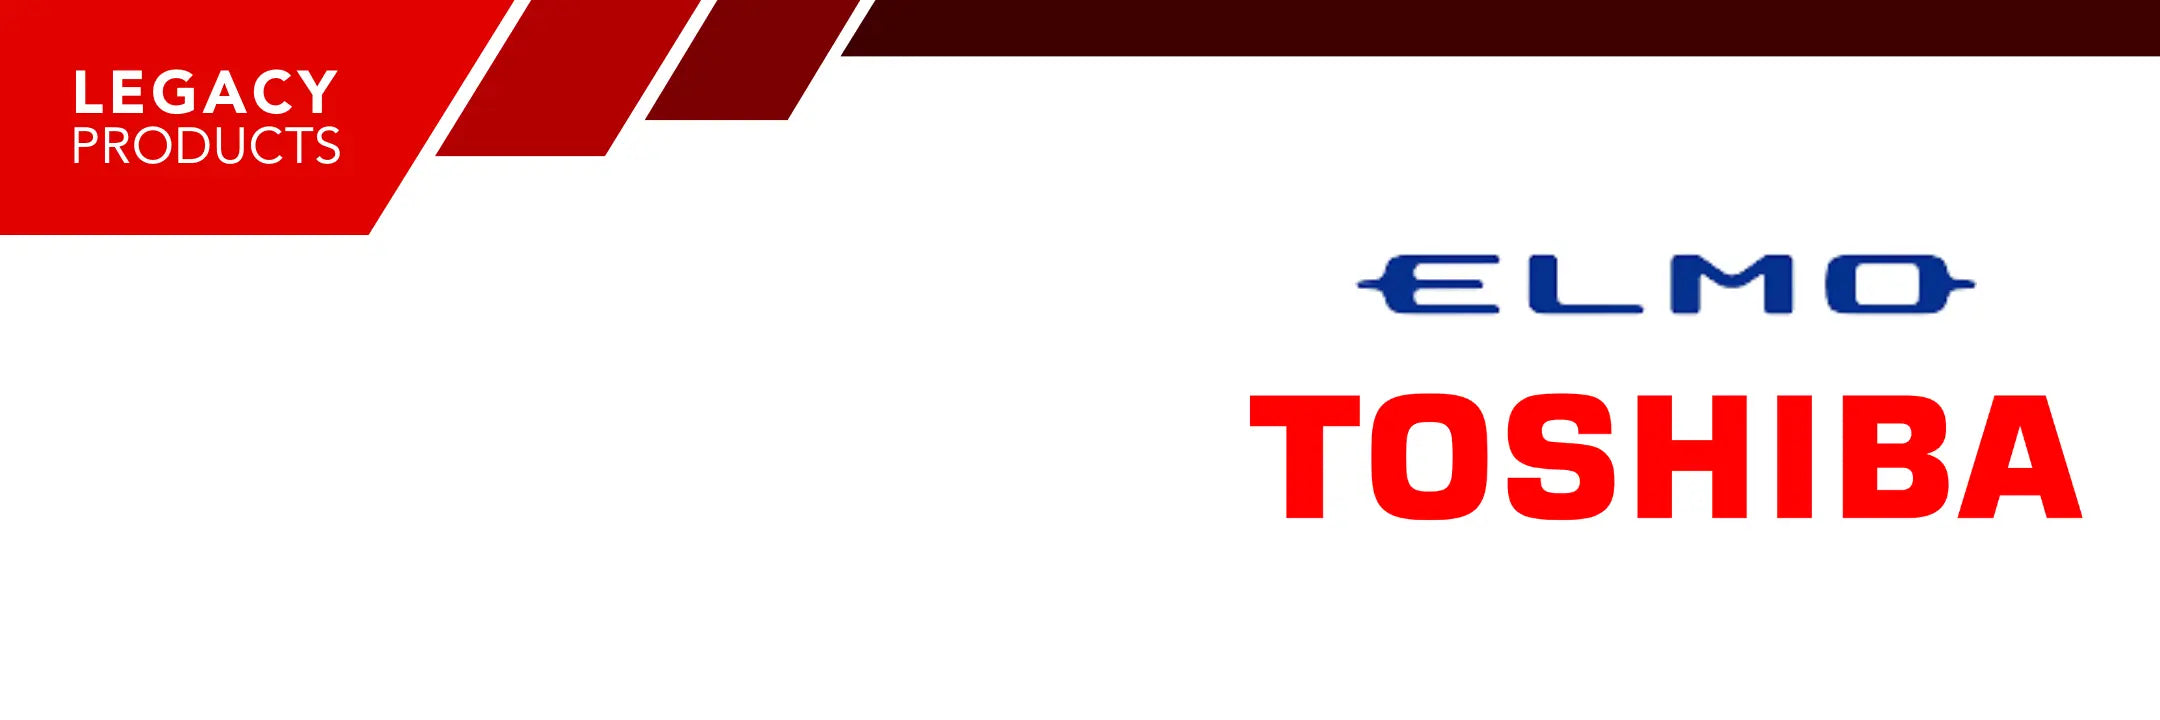 ELMO Toshiba legacy desktop banner